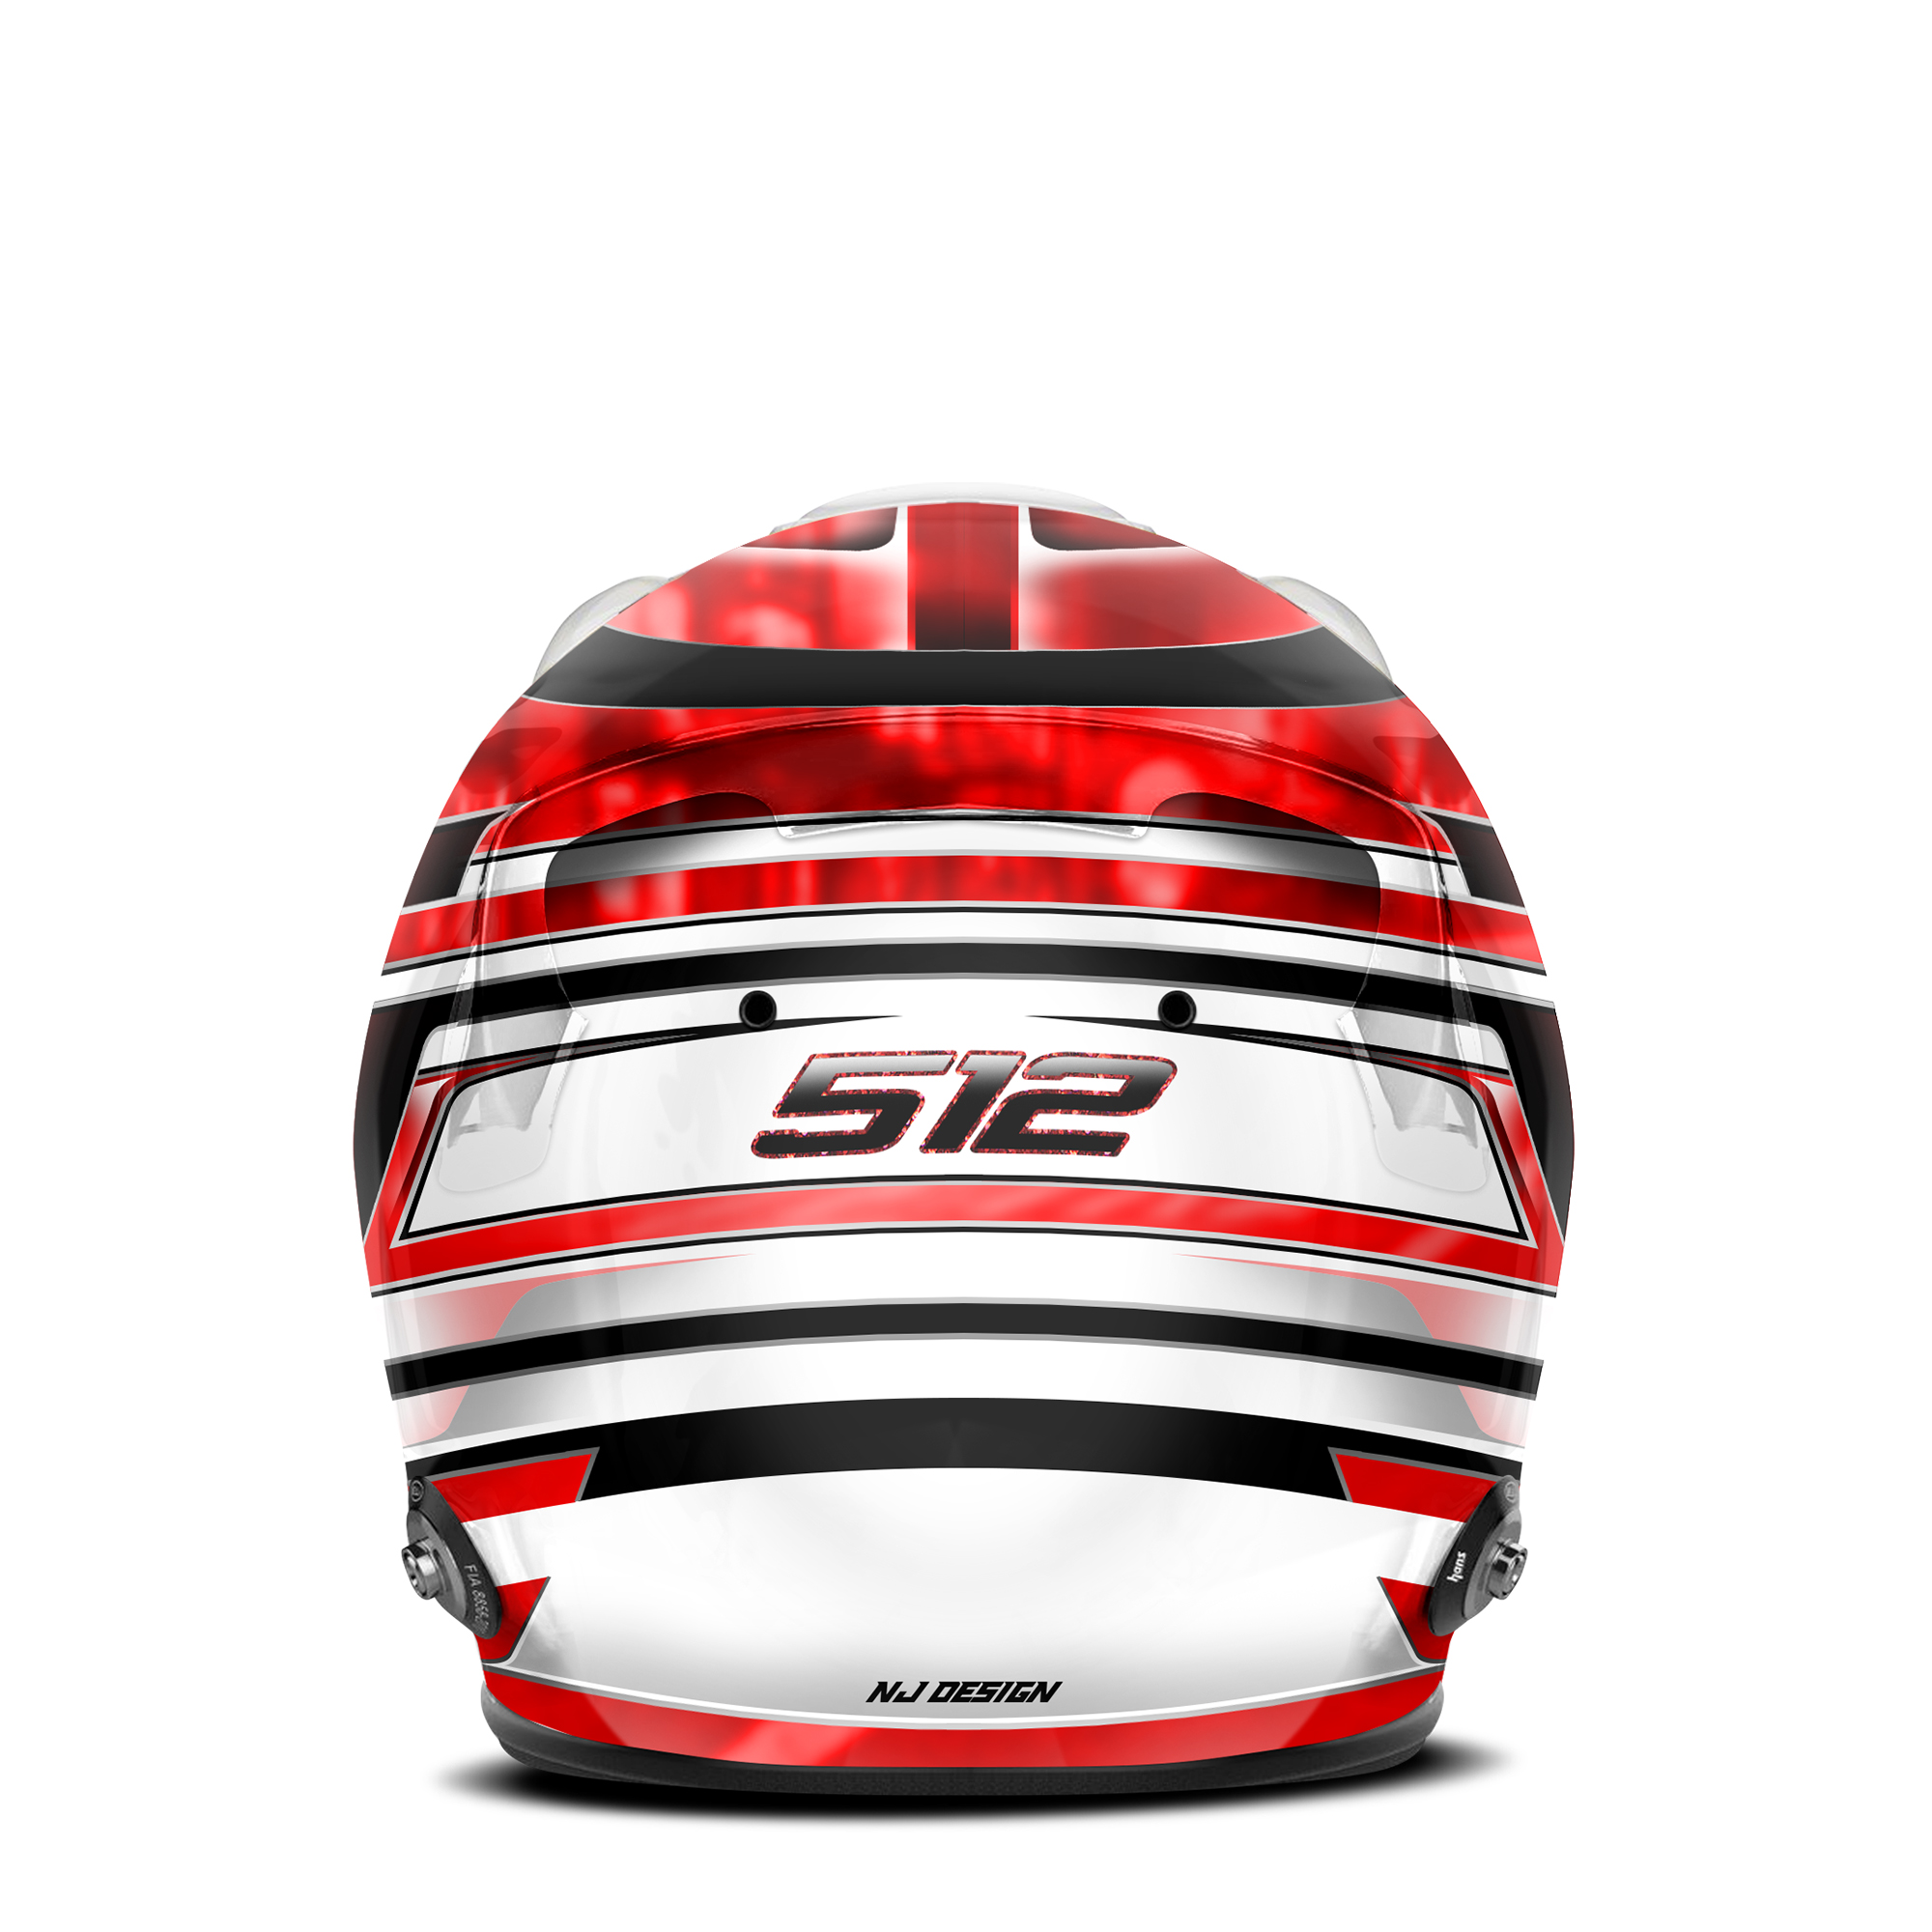 Bell rs7 pro helmet design